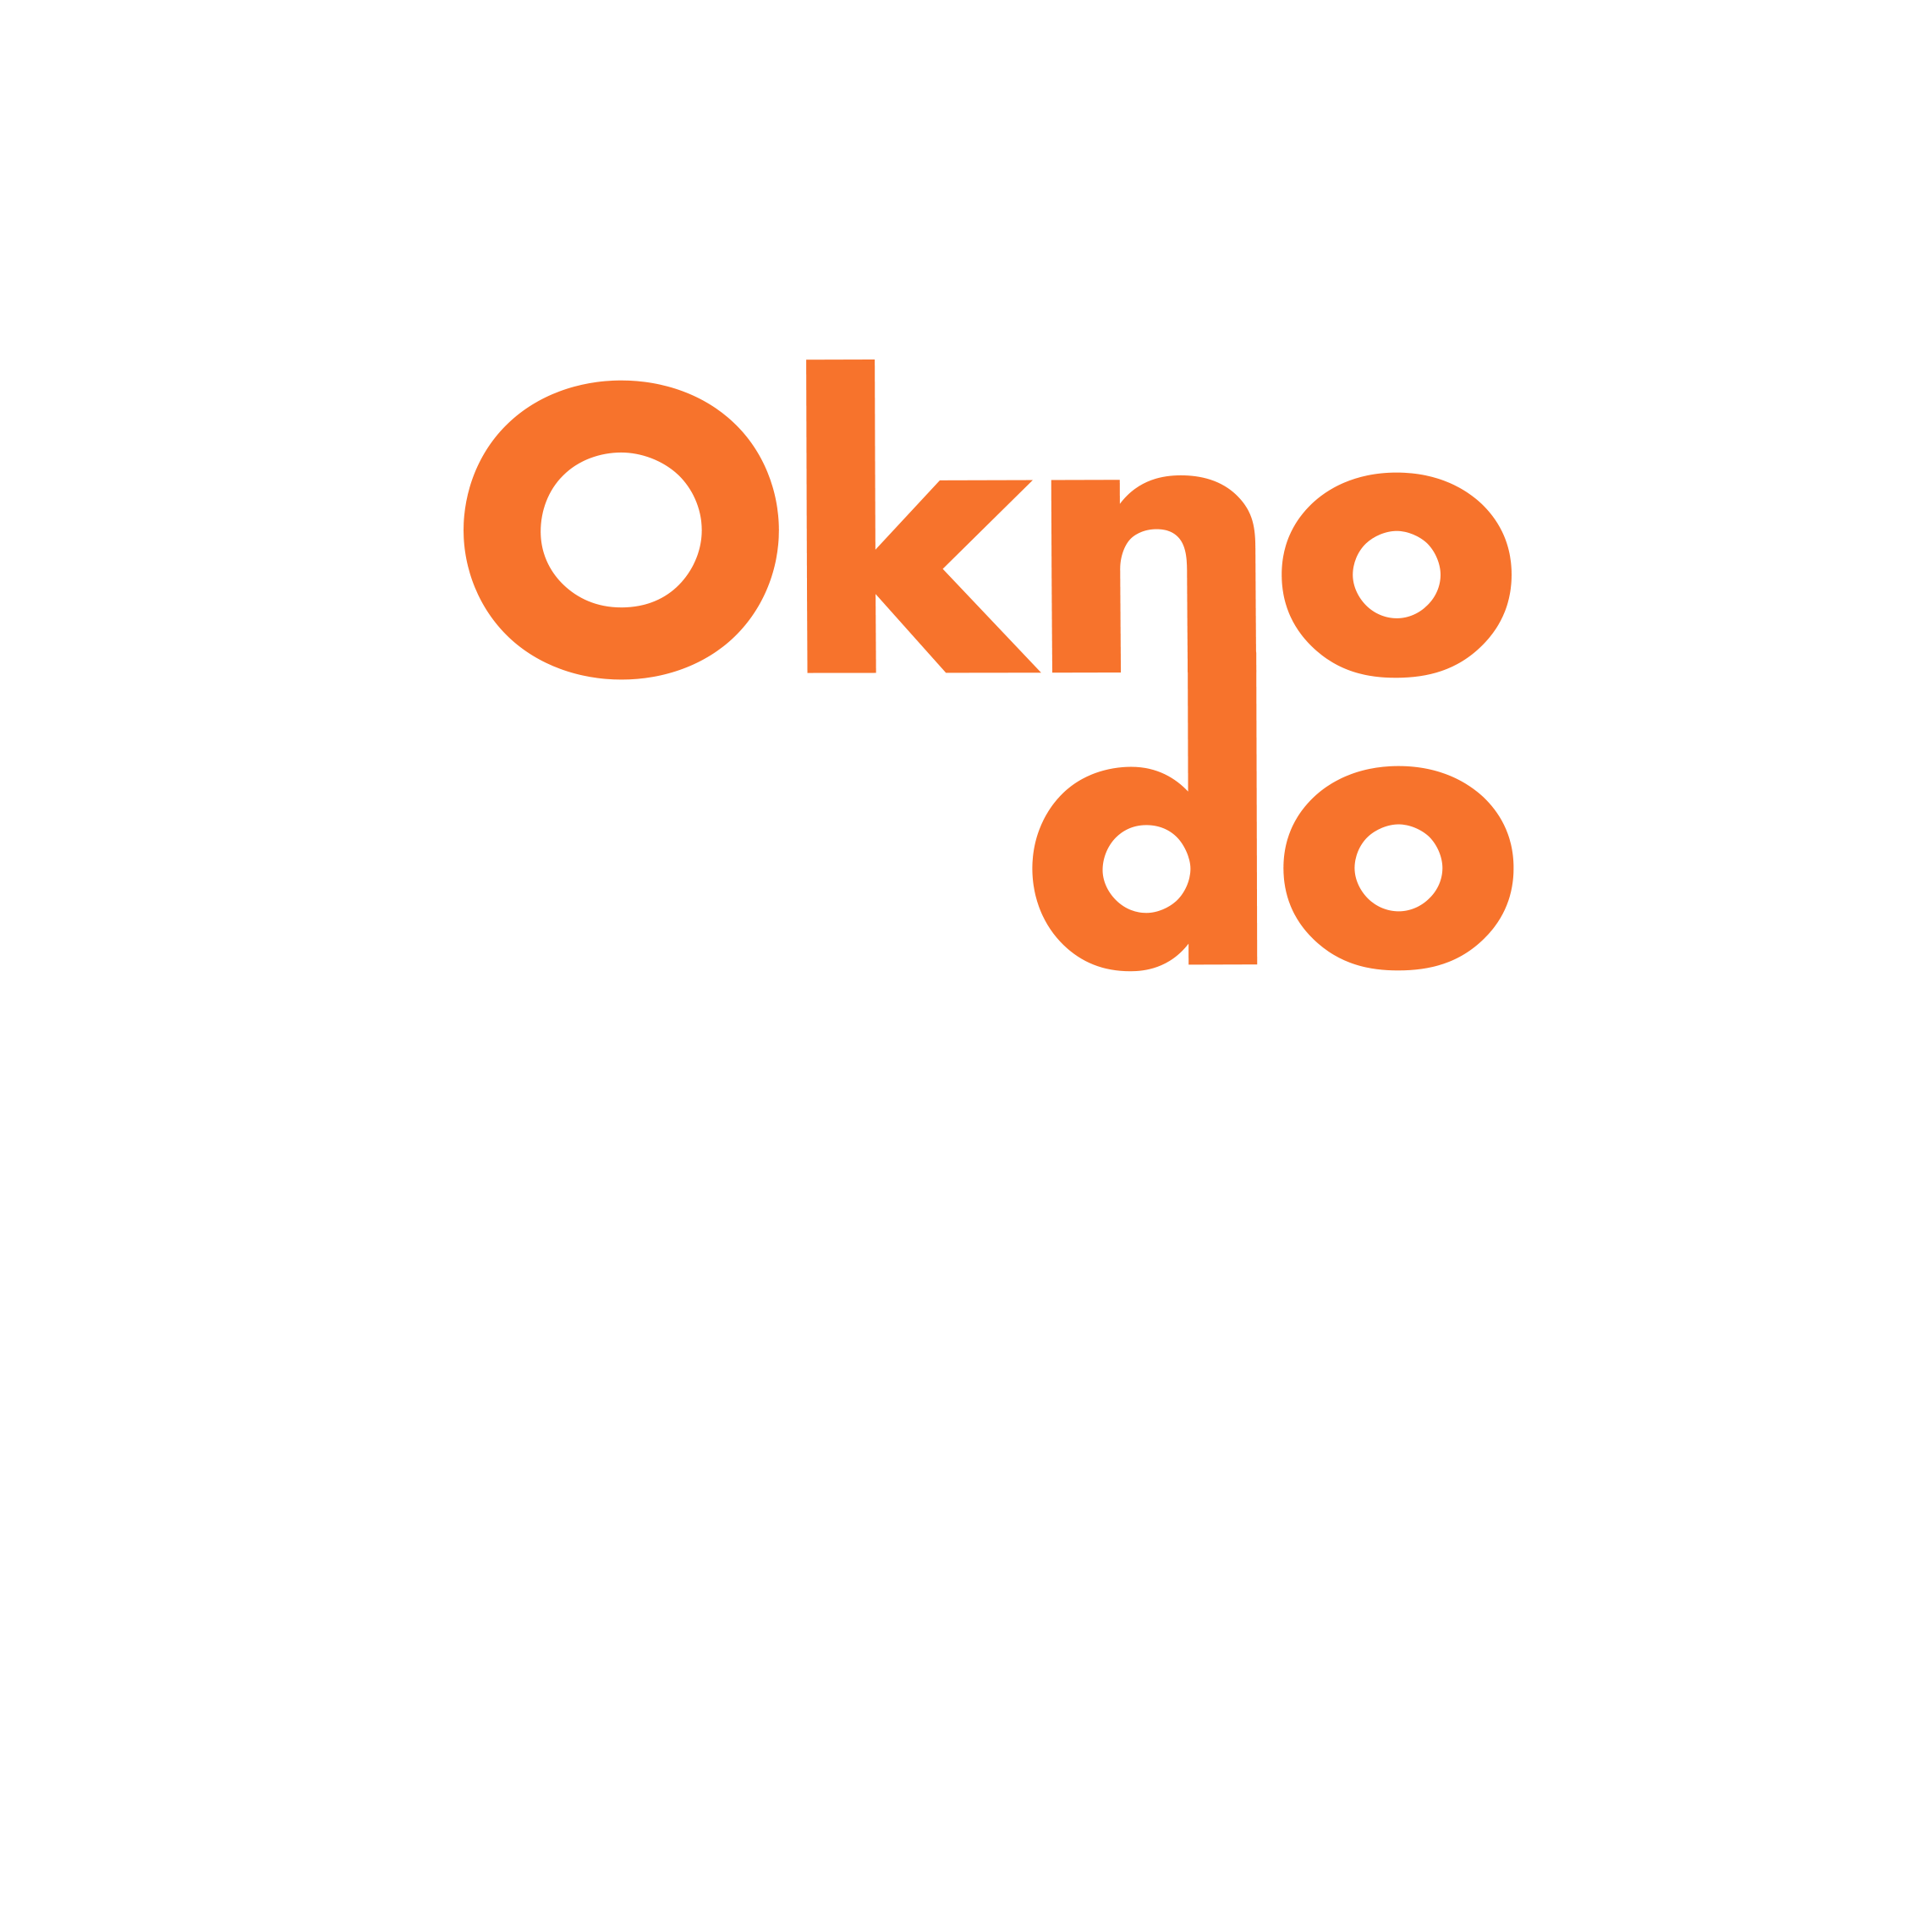 oknodopraxe logo